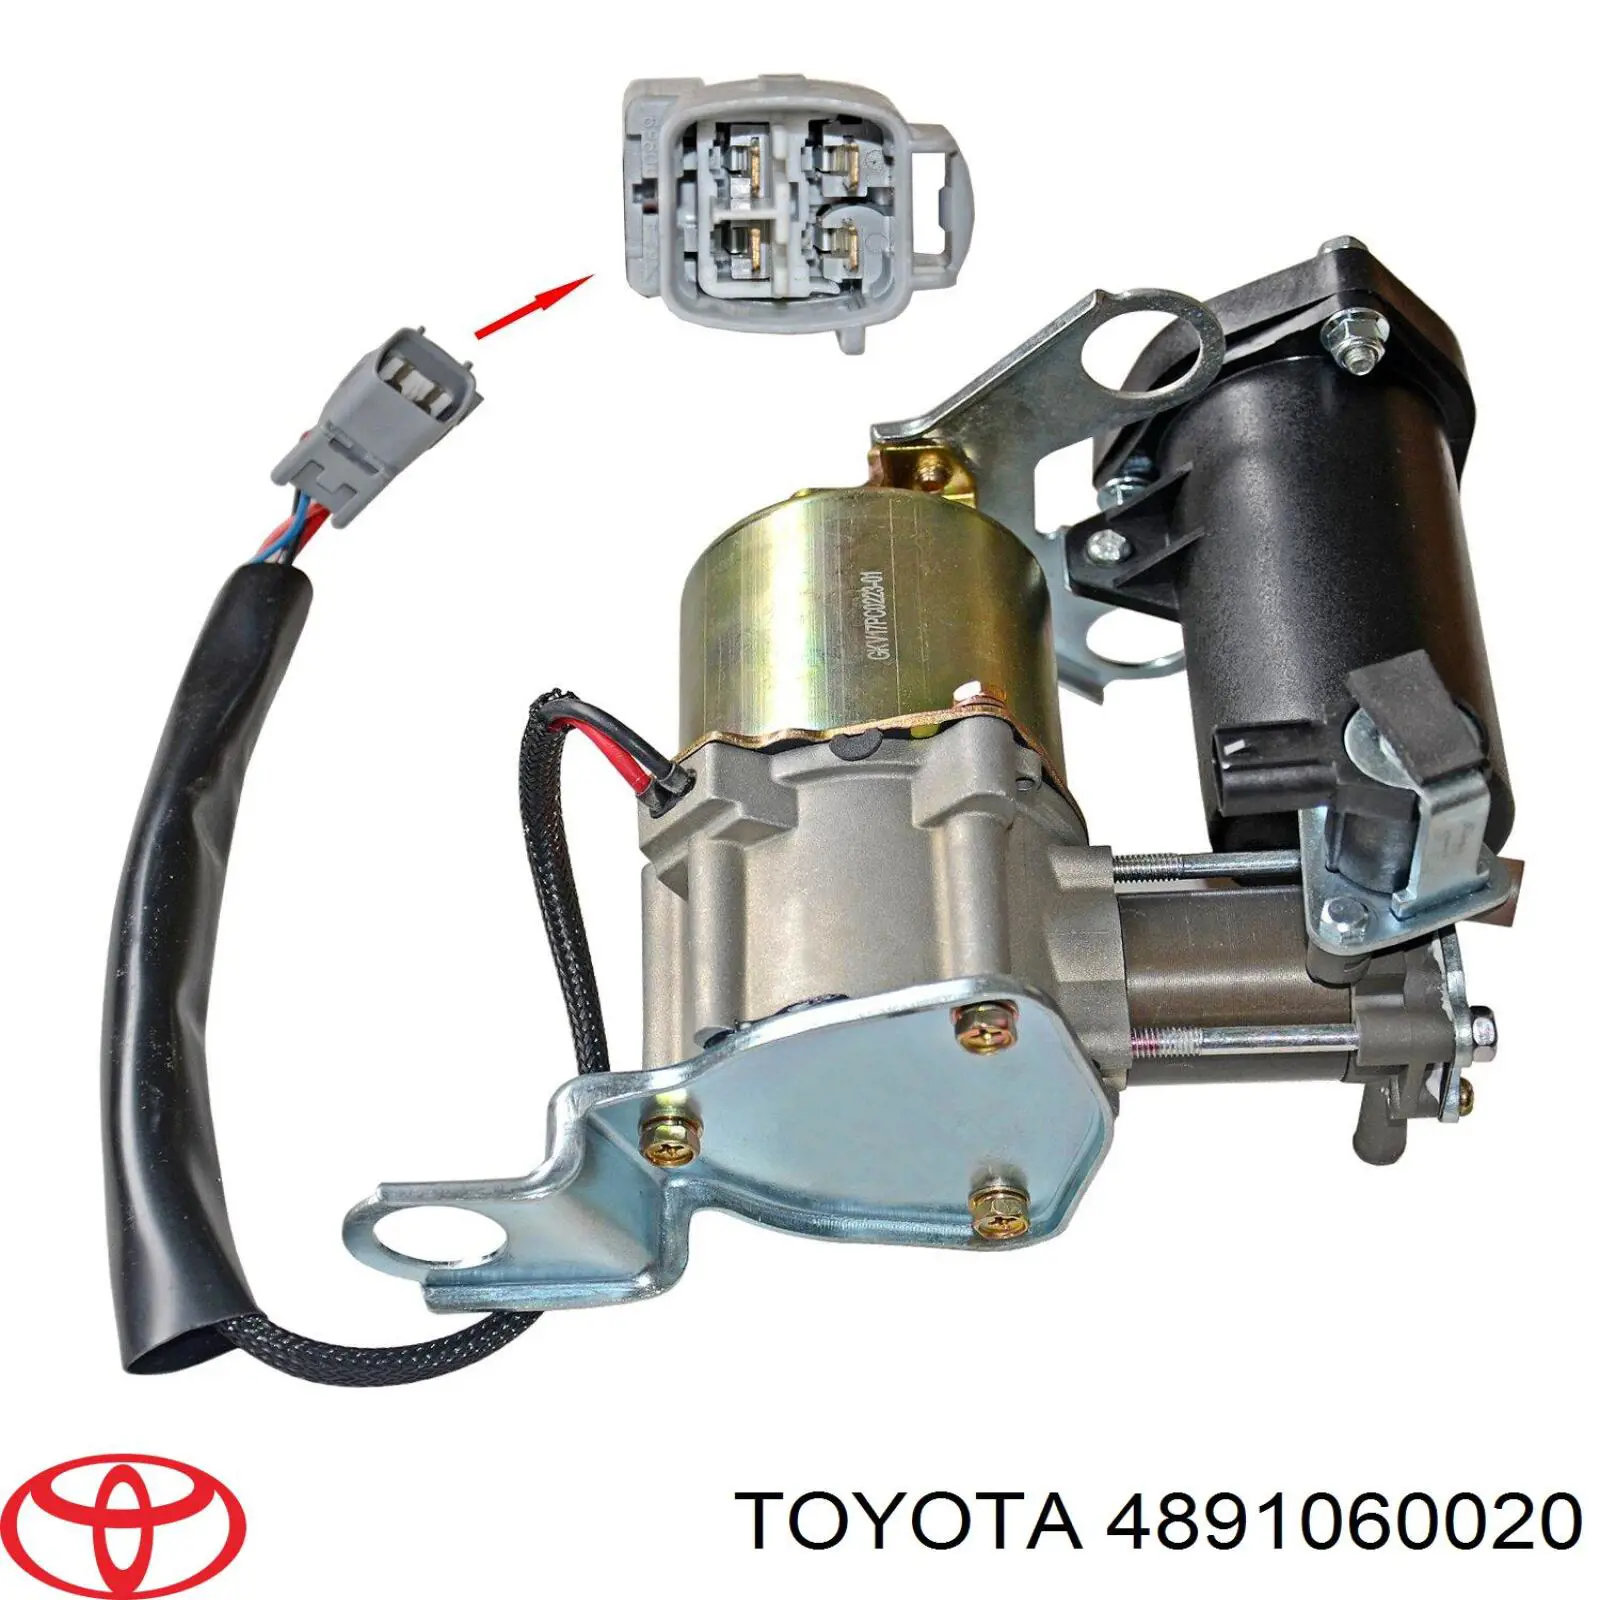 Bomba de compresor de suspensión neumática para Toyota 4Runner (GRN21, UZN21)